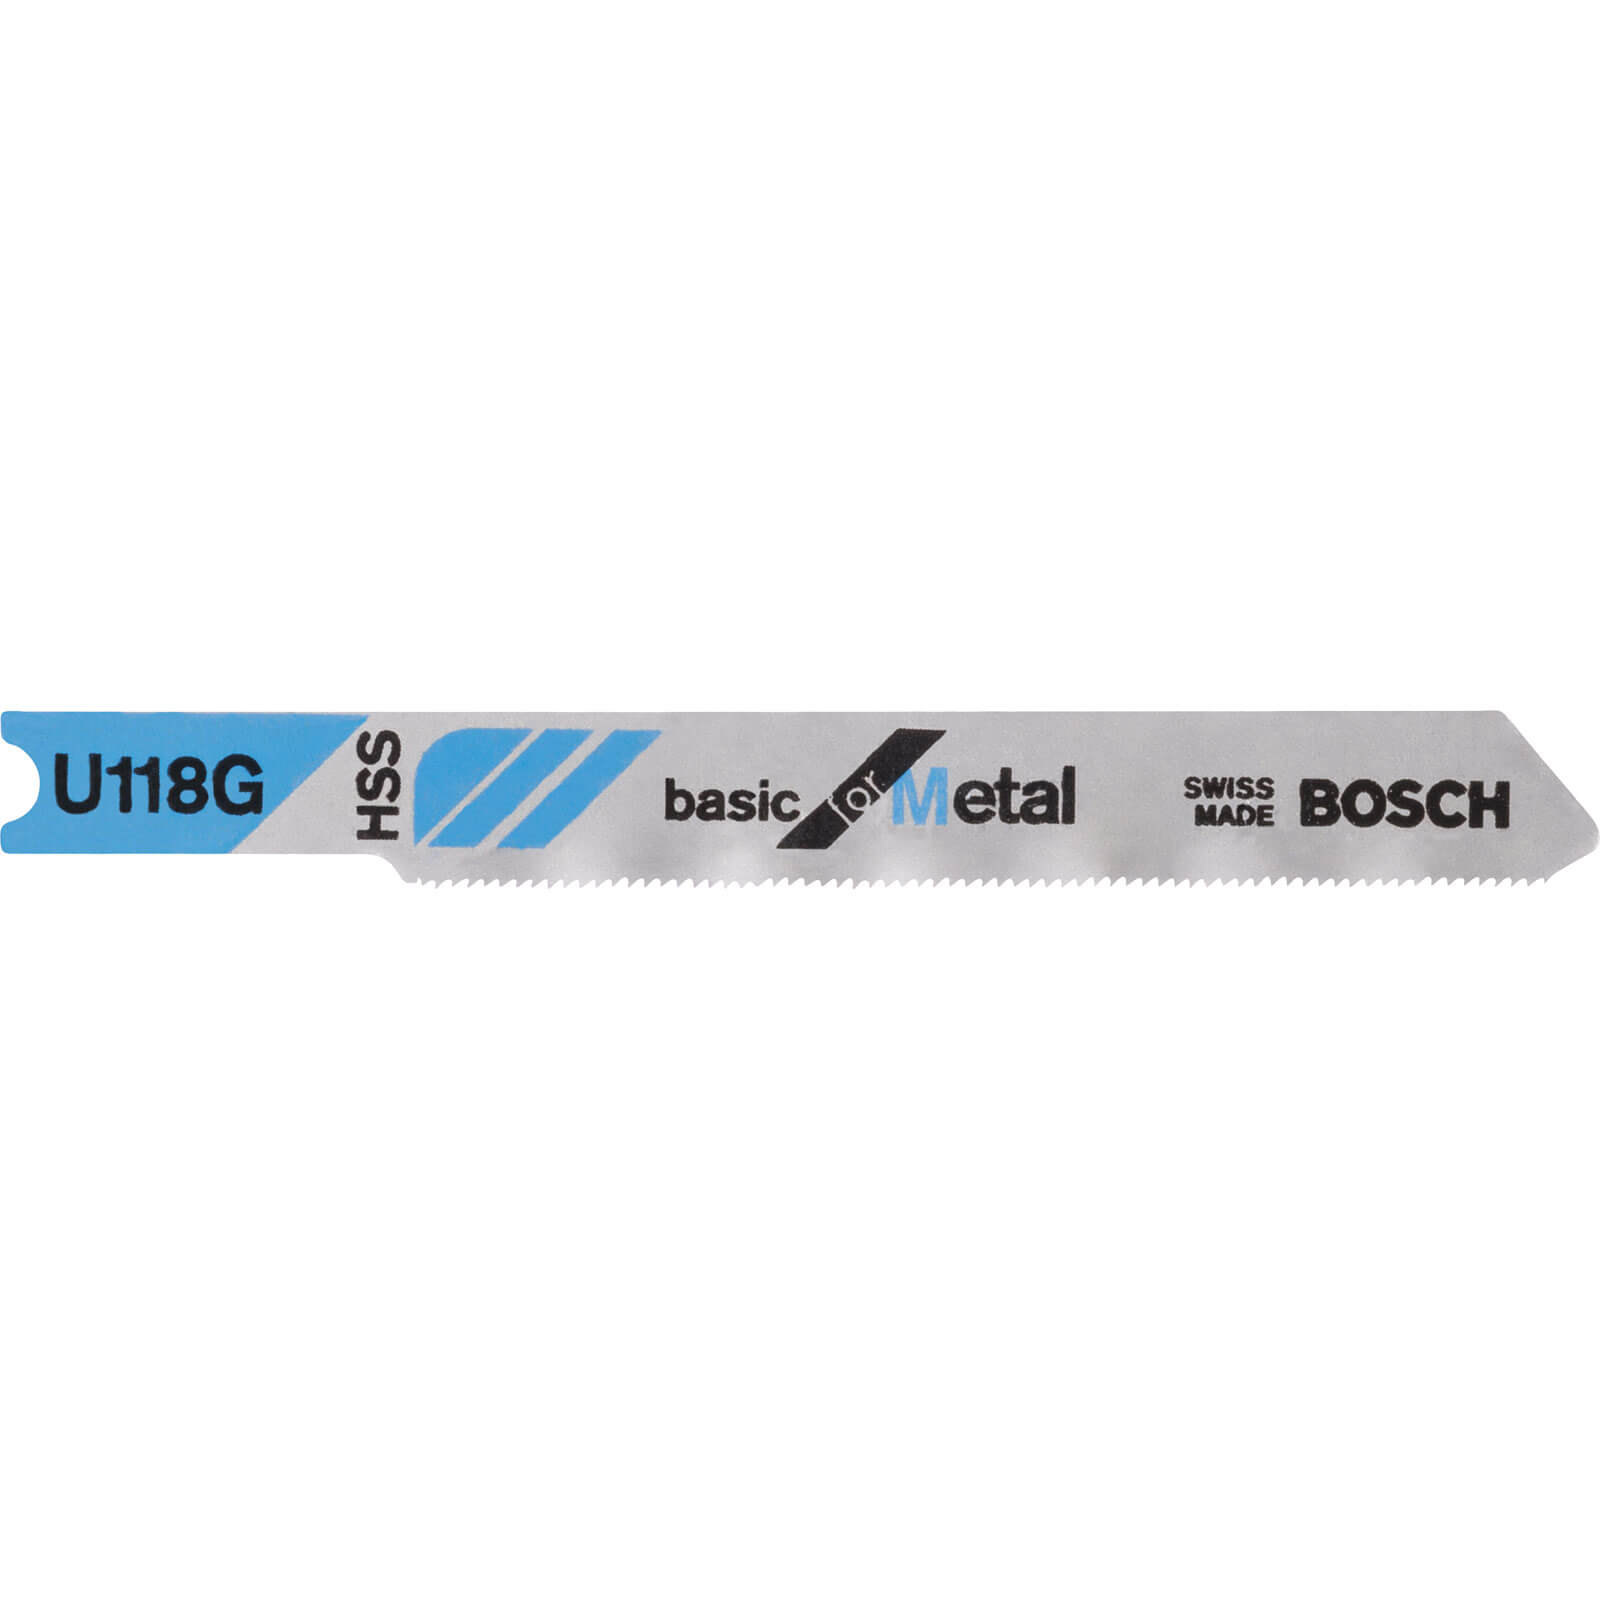 Photo of Bosch U118 G Metal Cutting Jigsaw Blades Pack Of 3